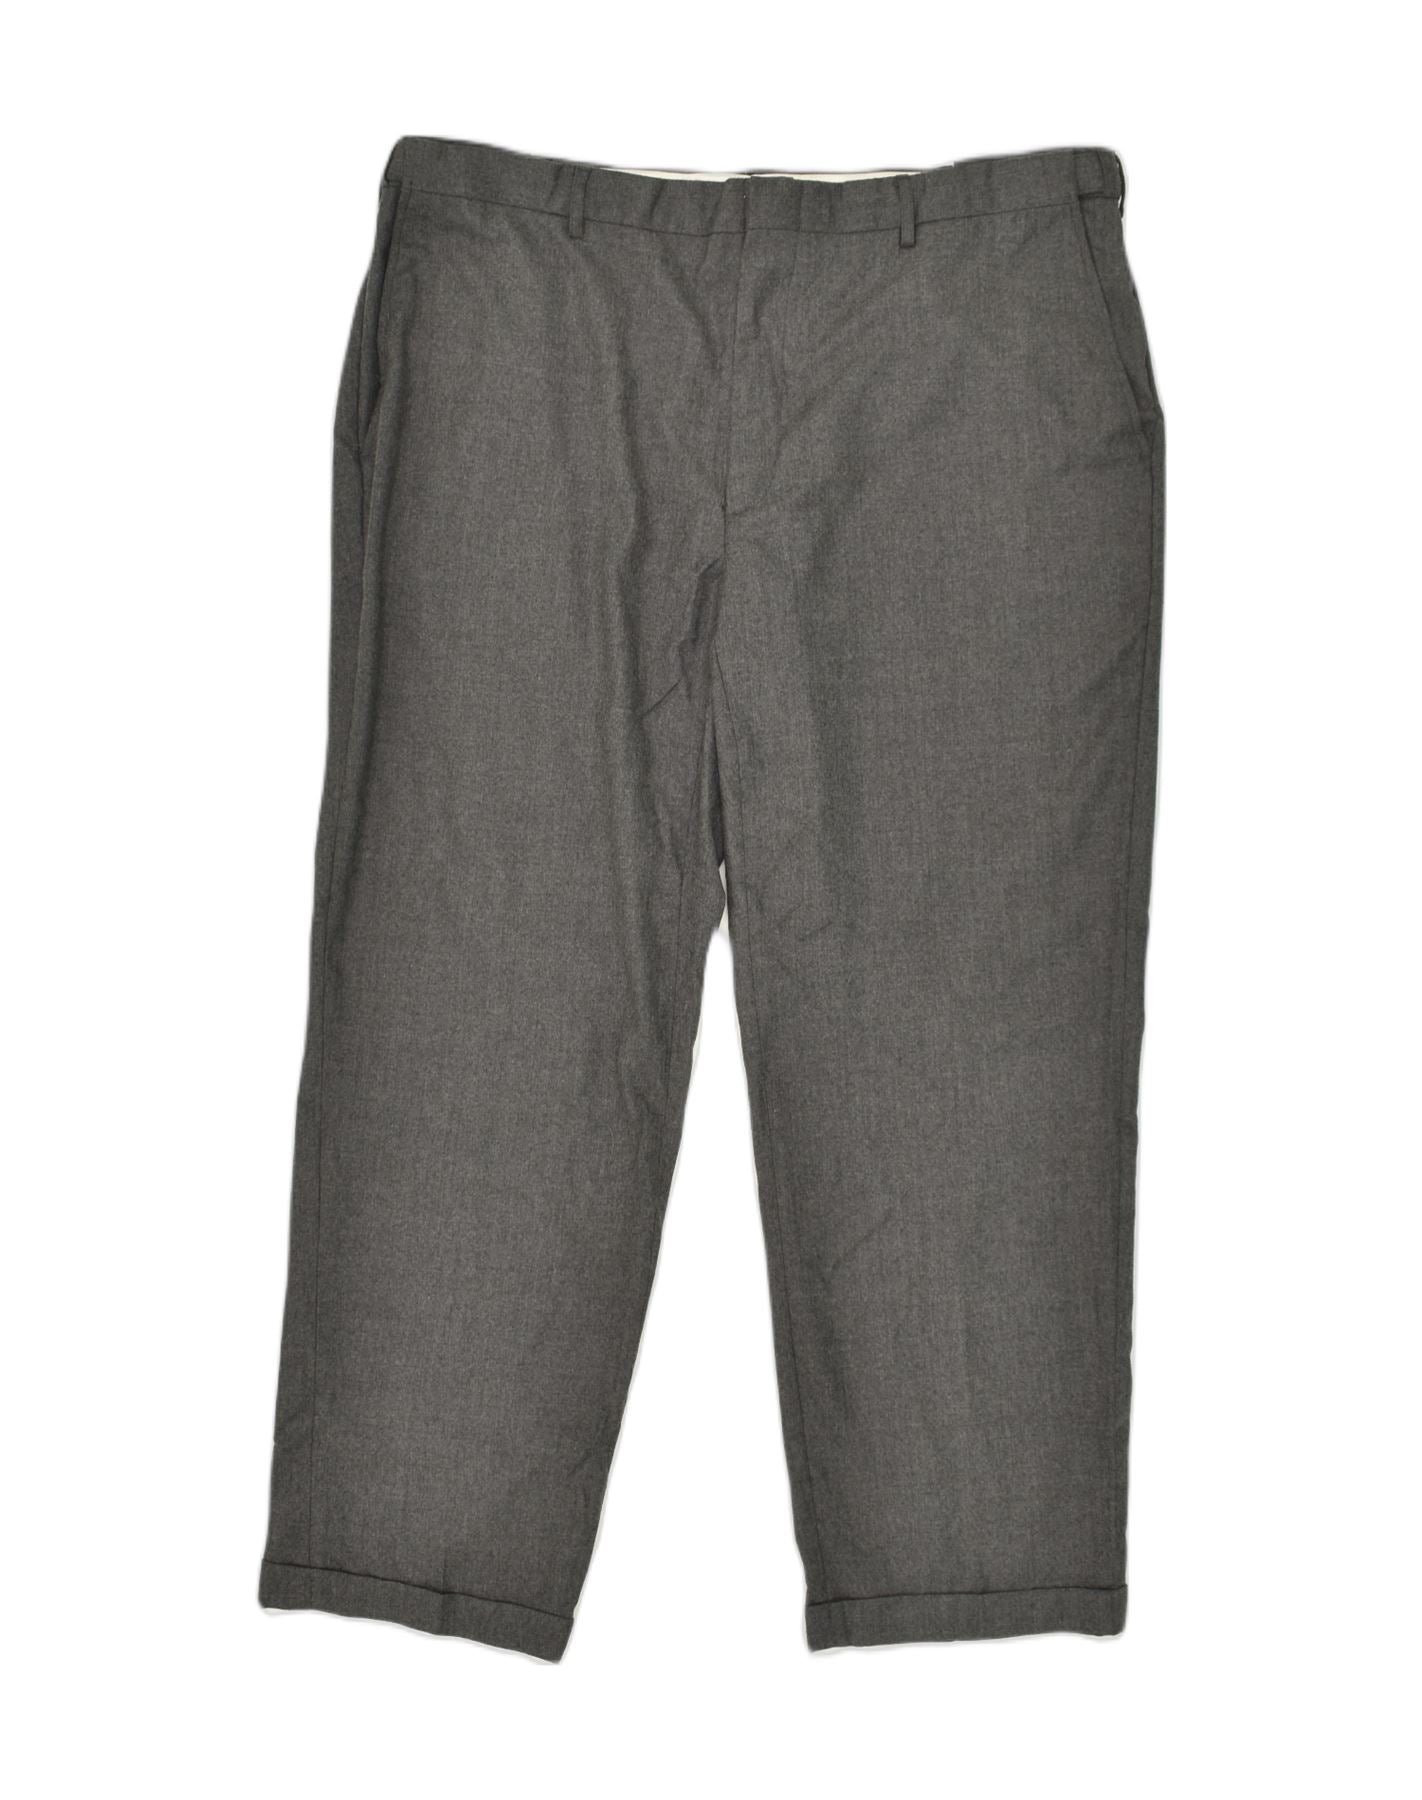 Orvis Dress Pants Polyester Wool Trousers Men's Size 38” Gray Charcoal |  eBay